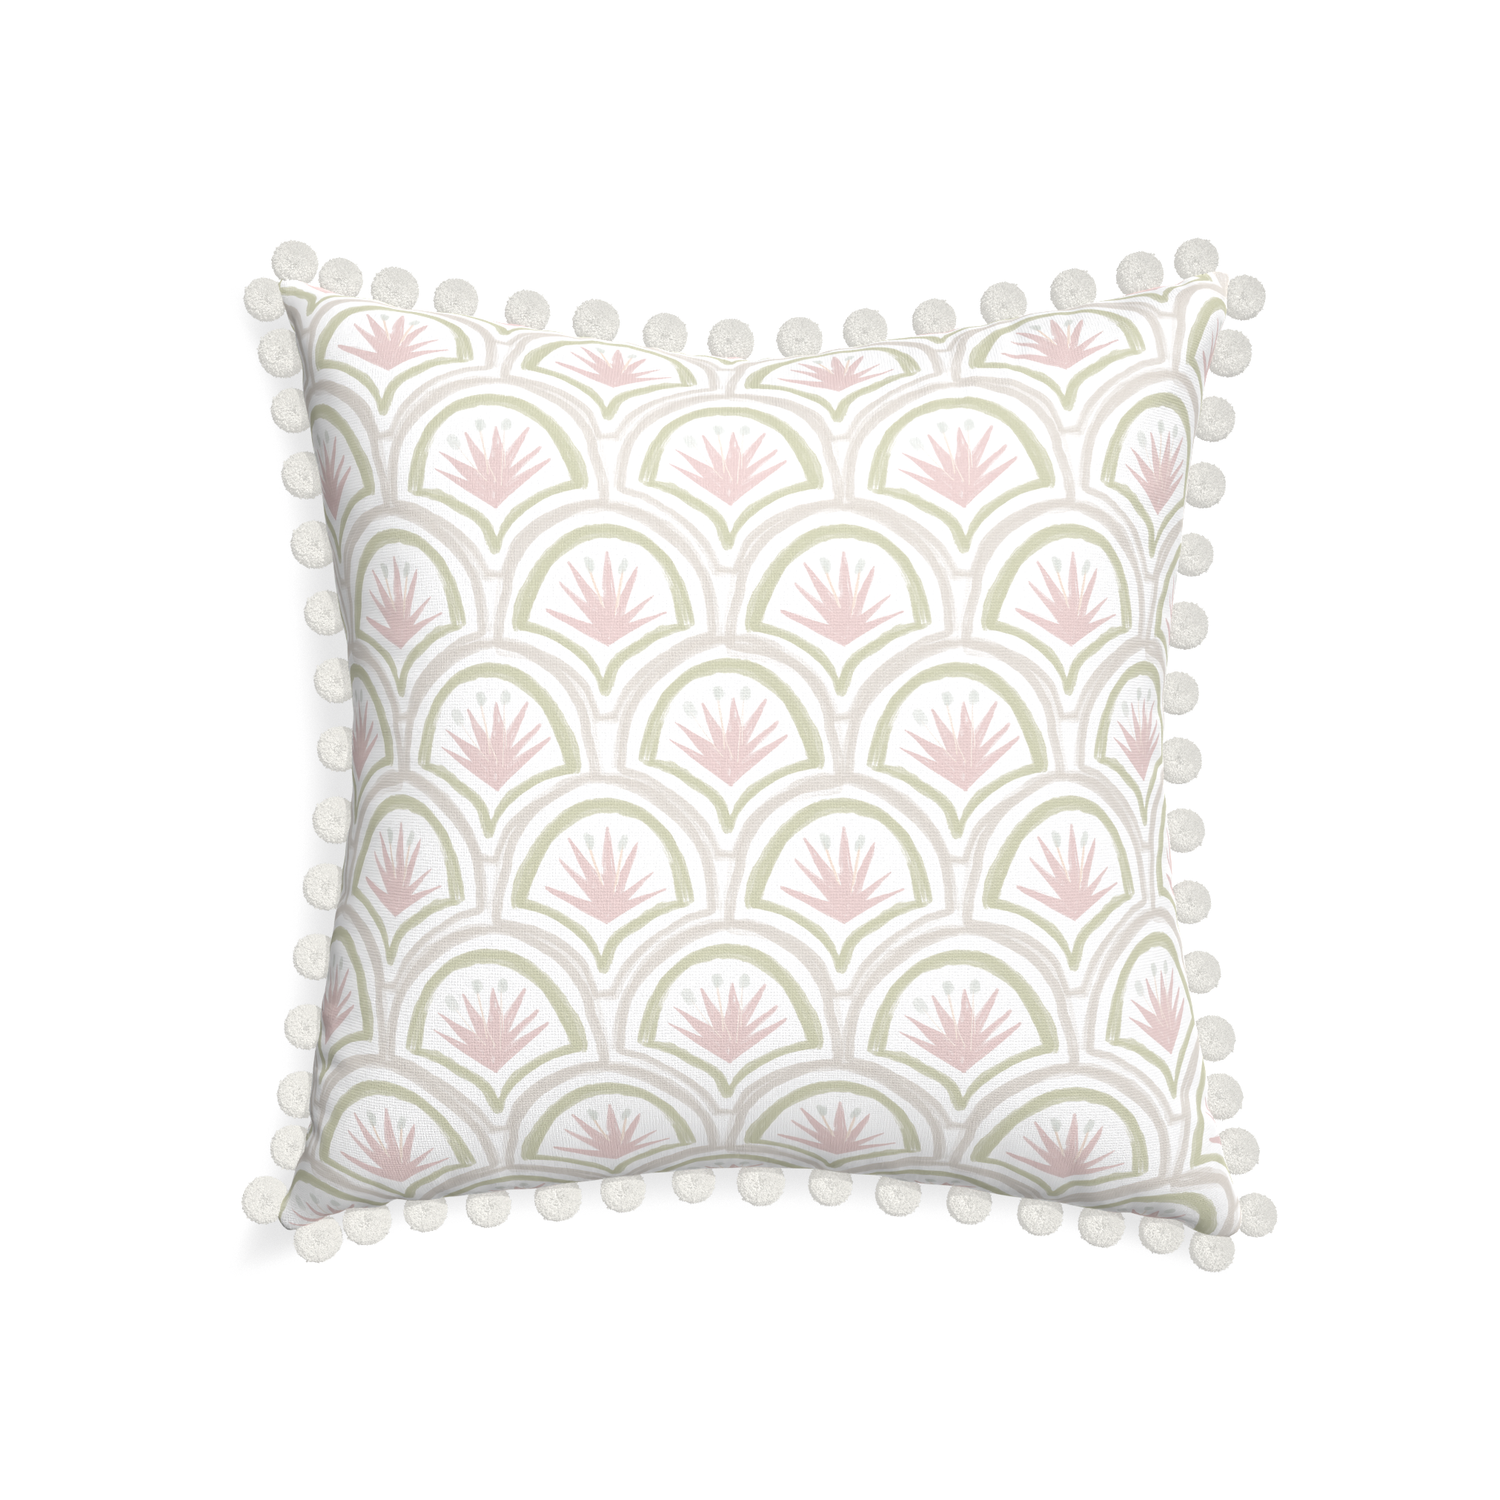 22-square thatcher rose custom pillow with snow pom pom on white background